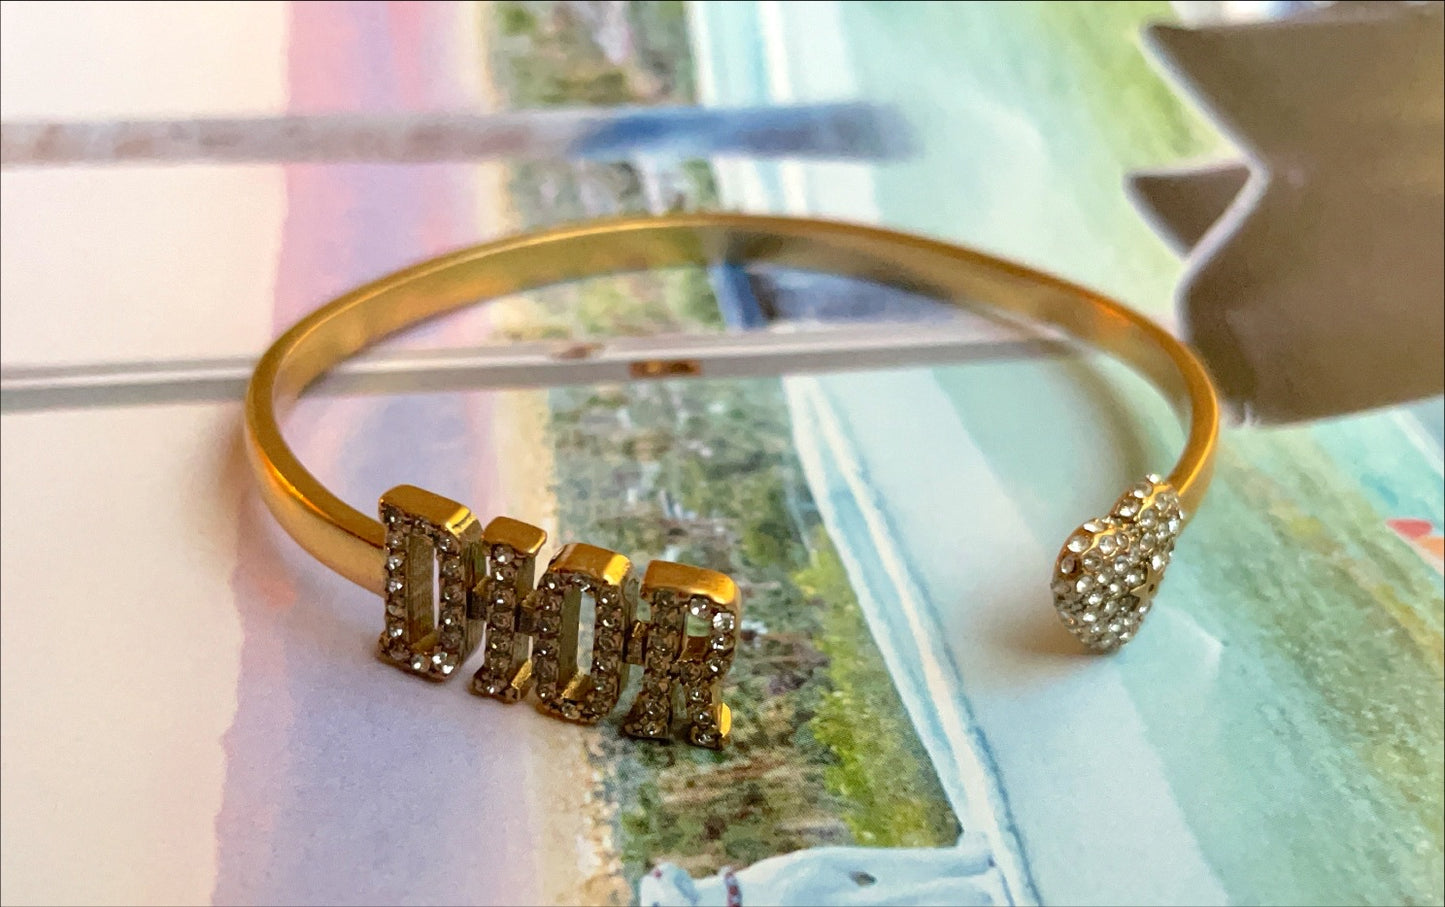 J’ADIOR Style Cuff bracelet